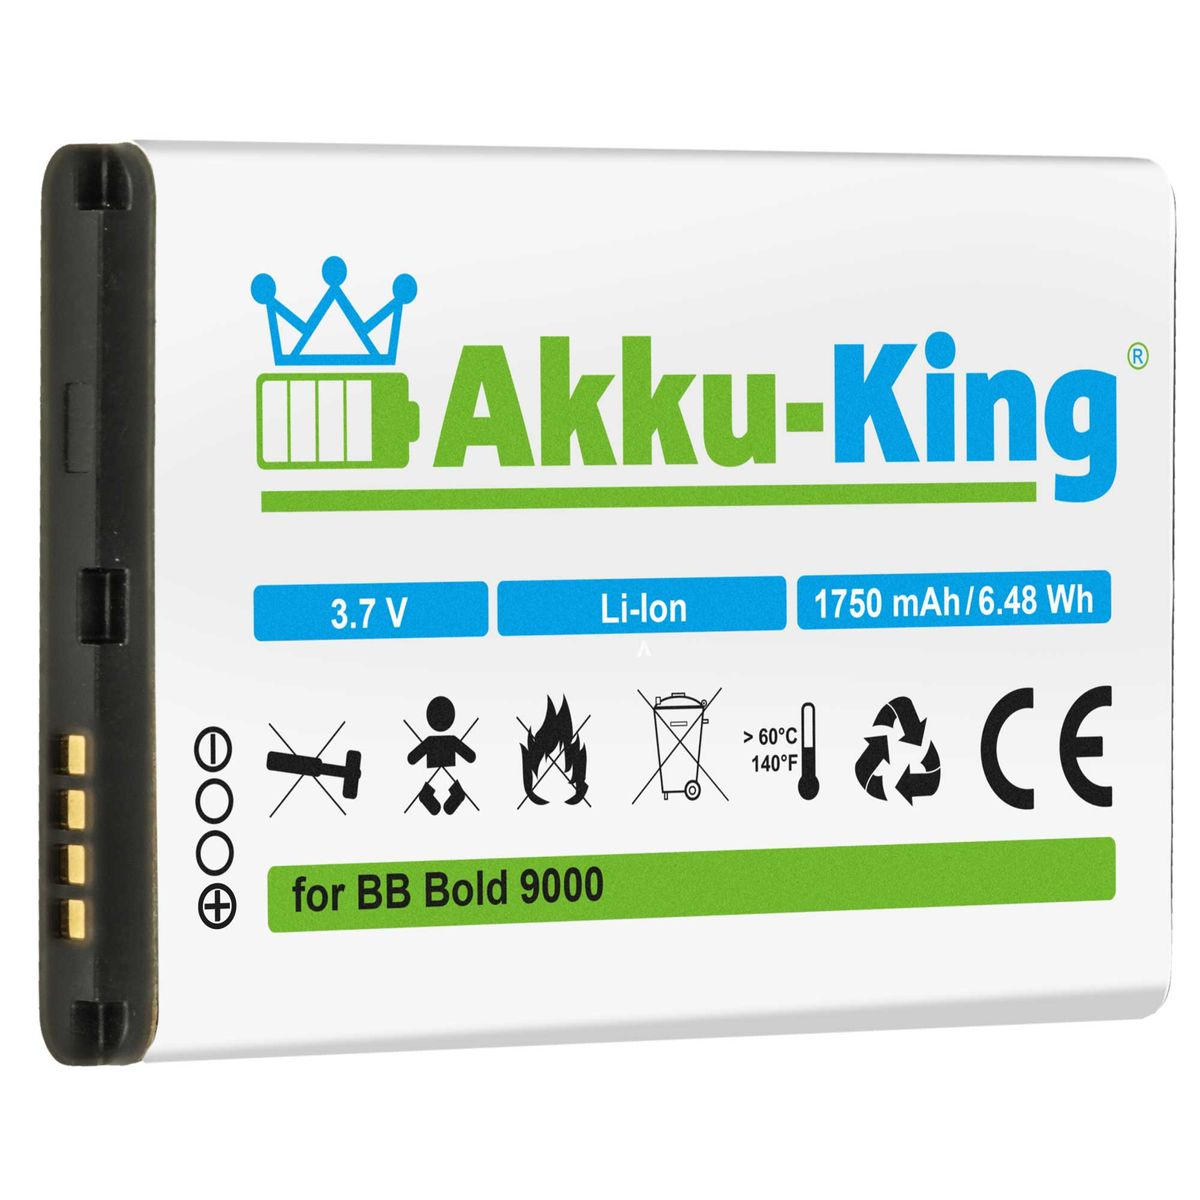 AKKU-KING 3.7 Akku Handy-Akku, Blackberry für Volt, 1700mAh M-S1 Li-Ion